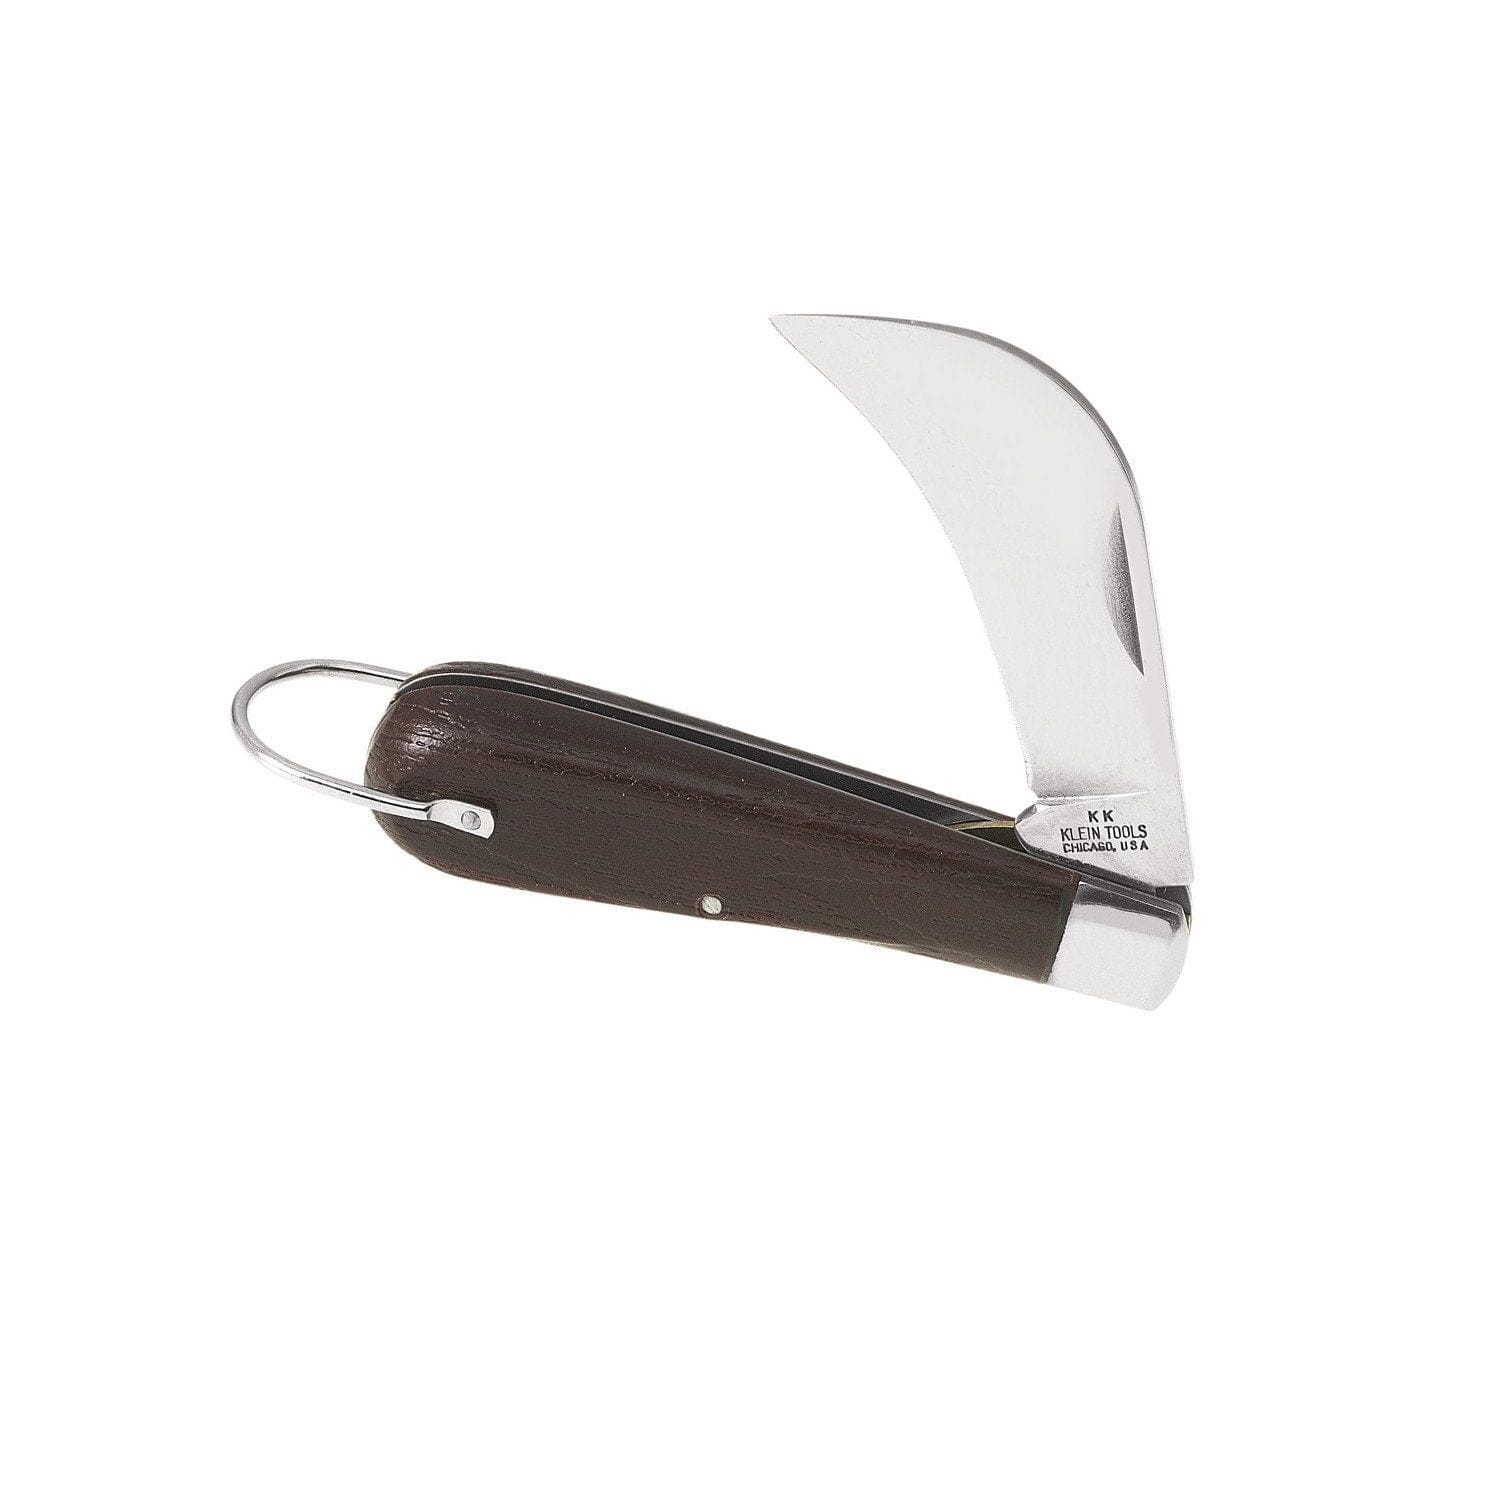 Reviews for Klein Tools Lightweight Lockback Pocket Knife